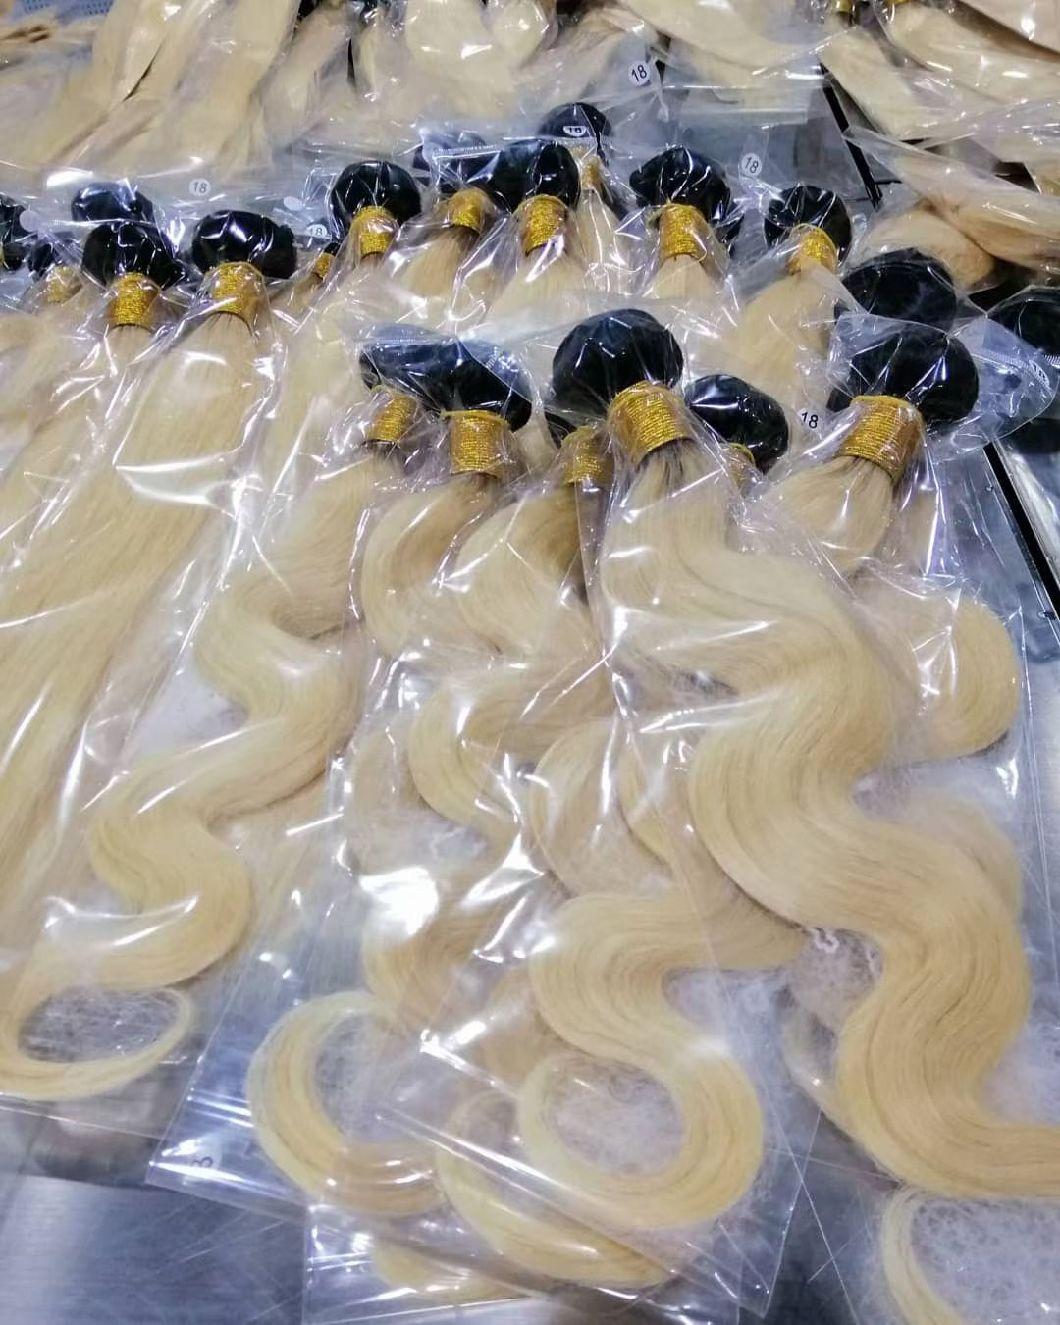 Wxj Longhair New Arrival Unprocessed 100% Raw Hair Brazilian Virgin Human Hair Bundles Mink Natural Human Hair